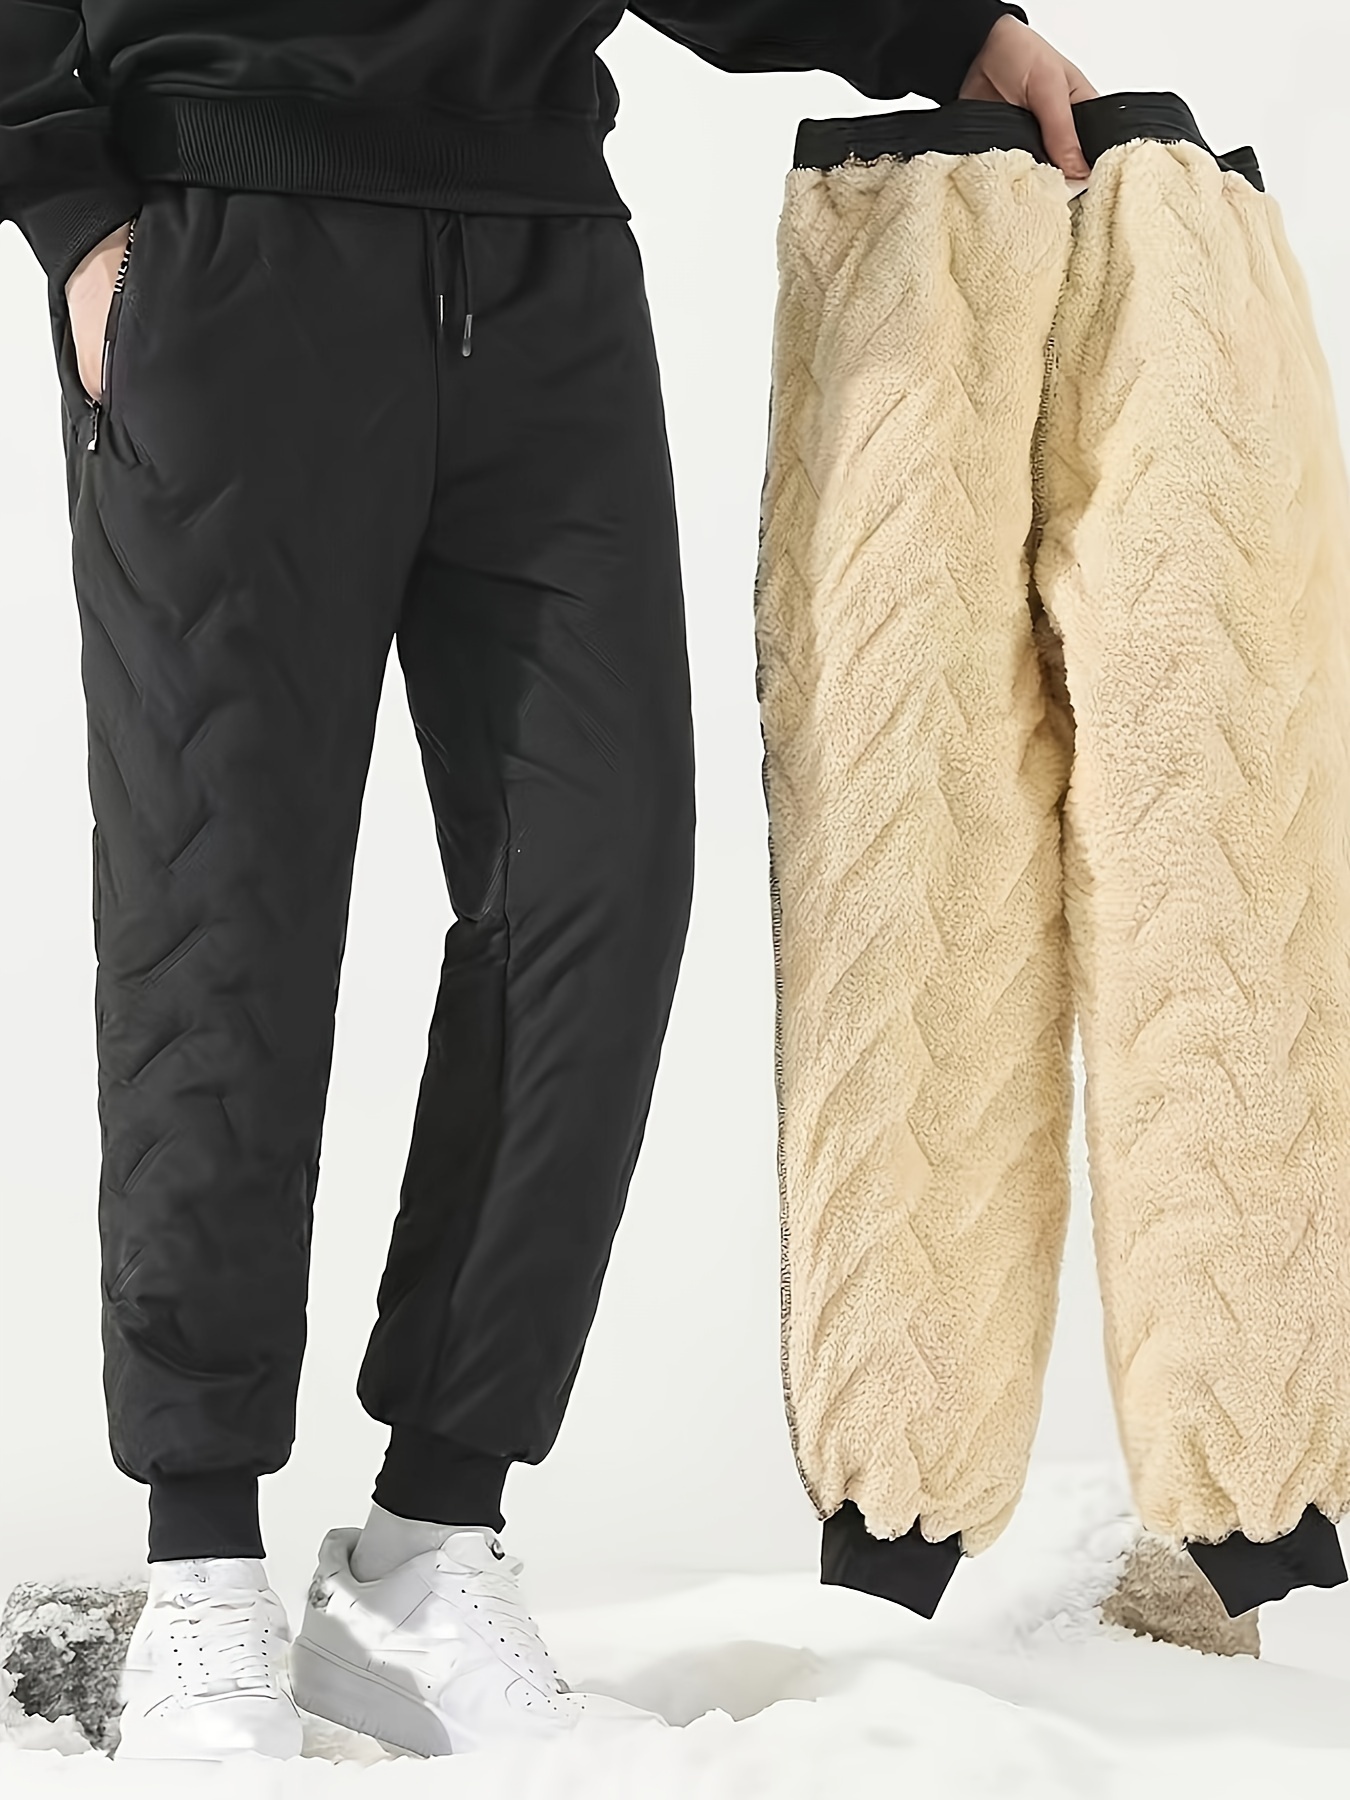 New Warm Pants Women Outdoor Pants Thick Fleece Sport Trousers